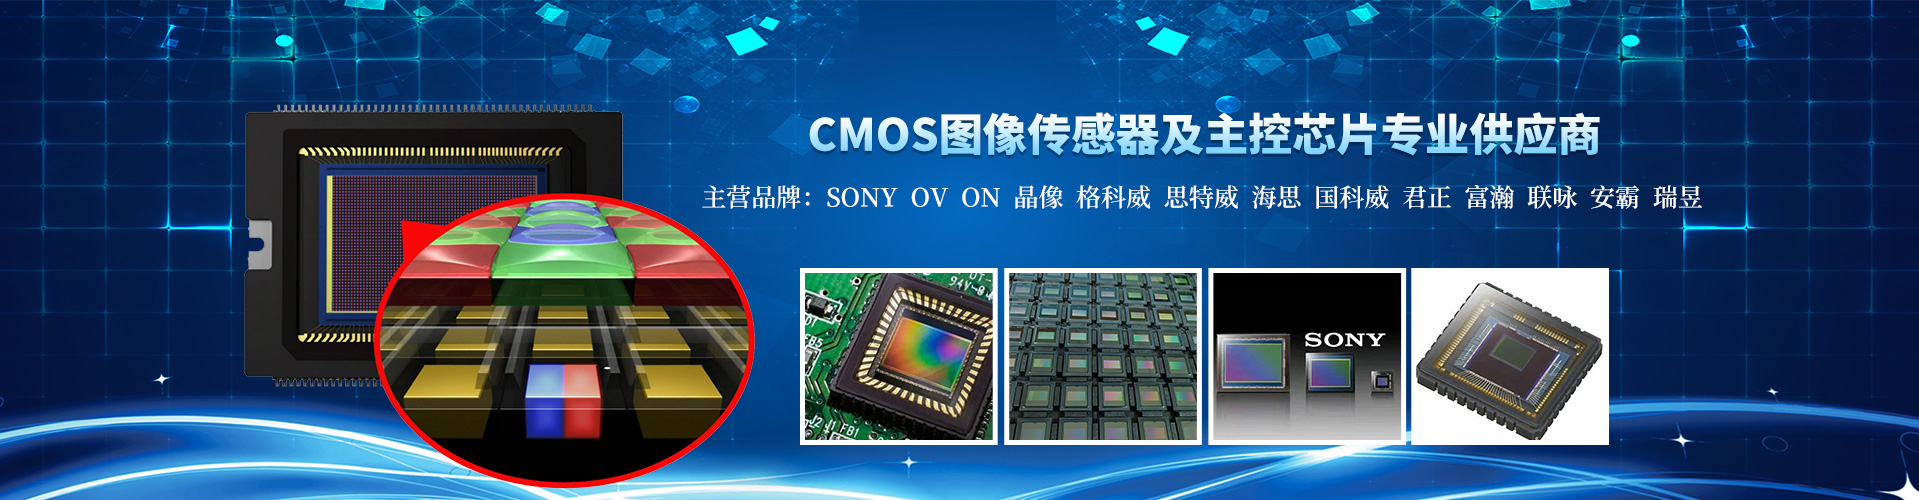 PC7070D CMOS Sensor